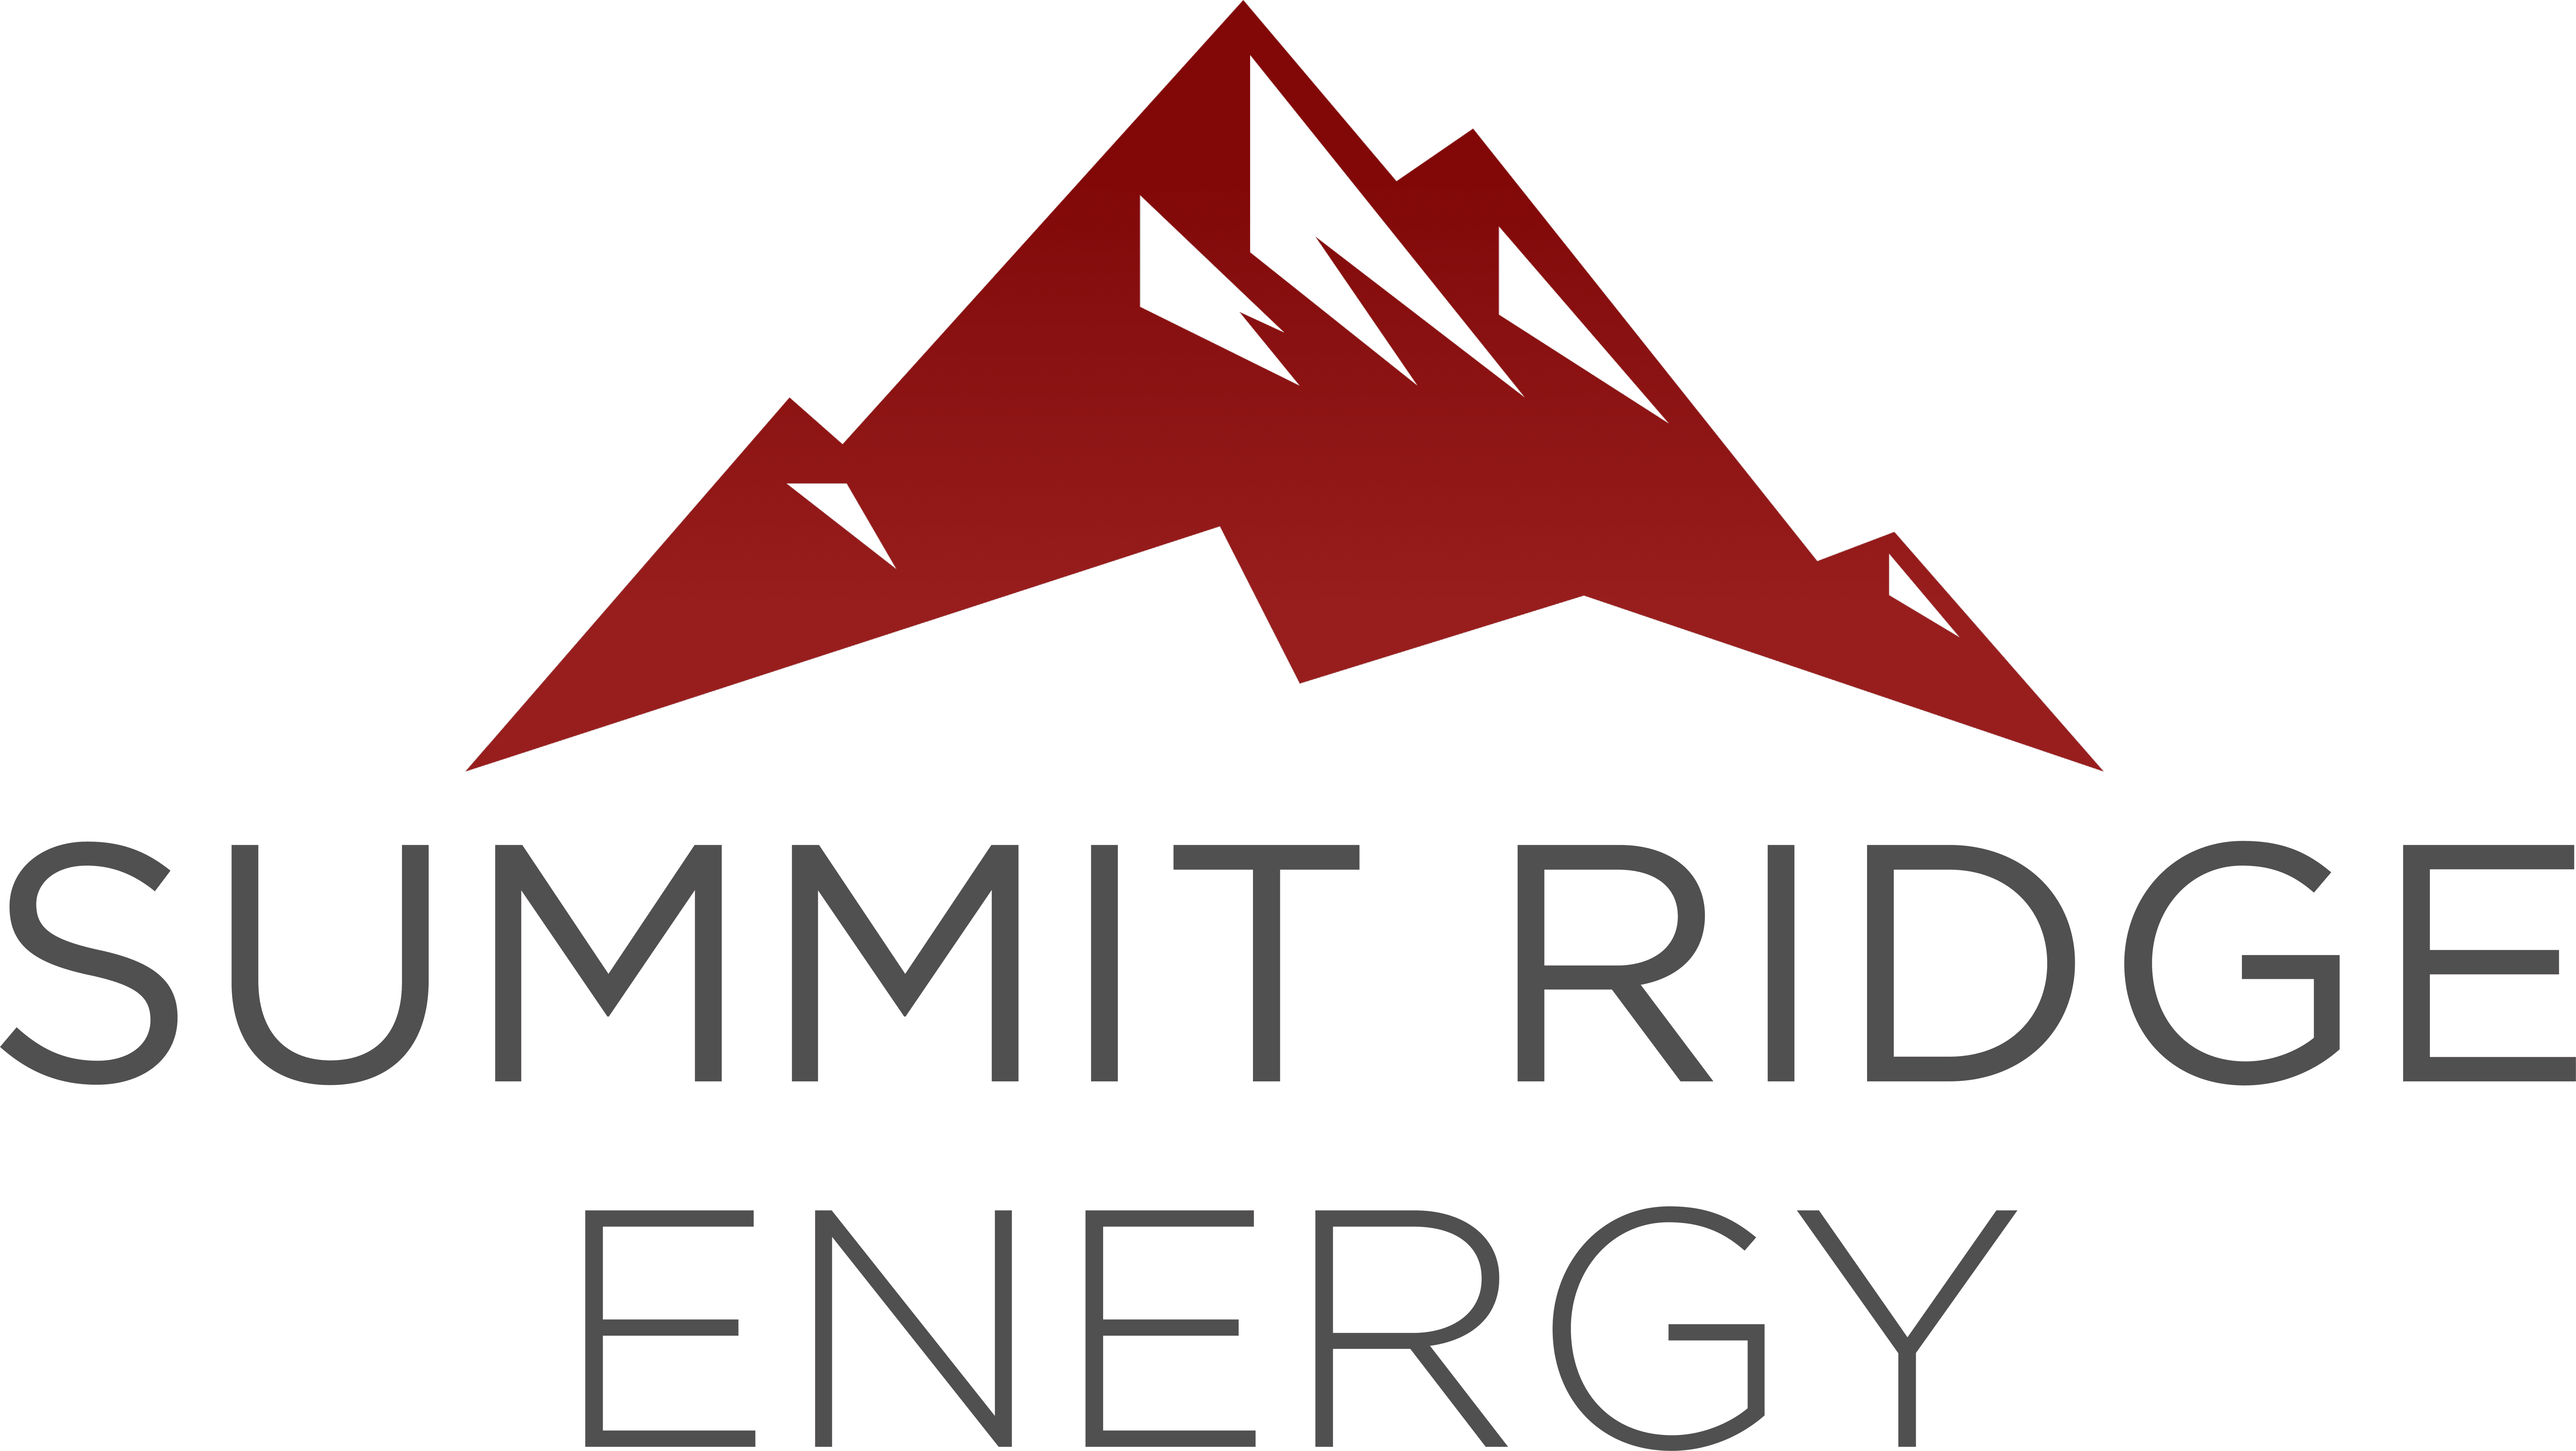 Summit ridge energy